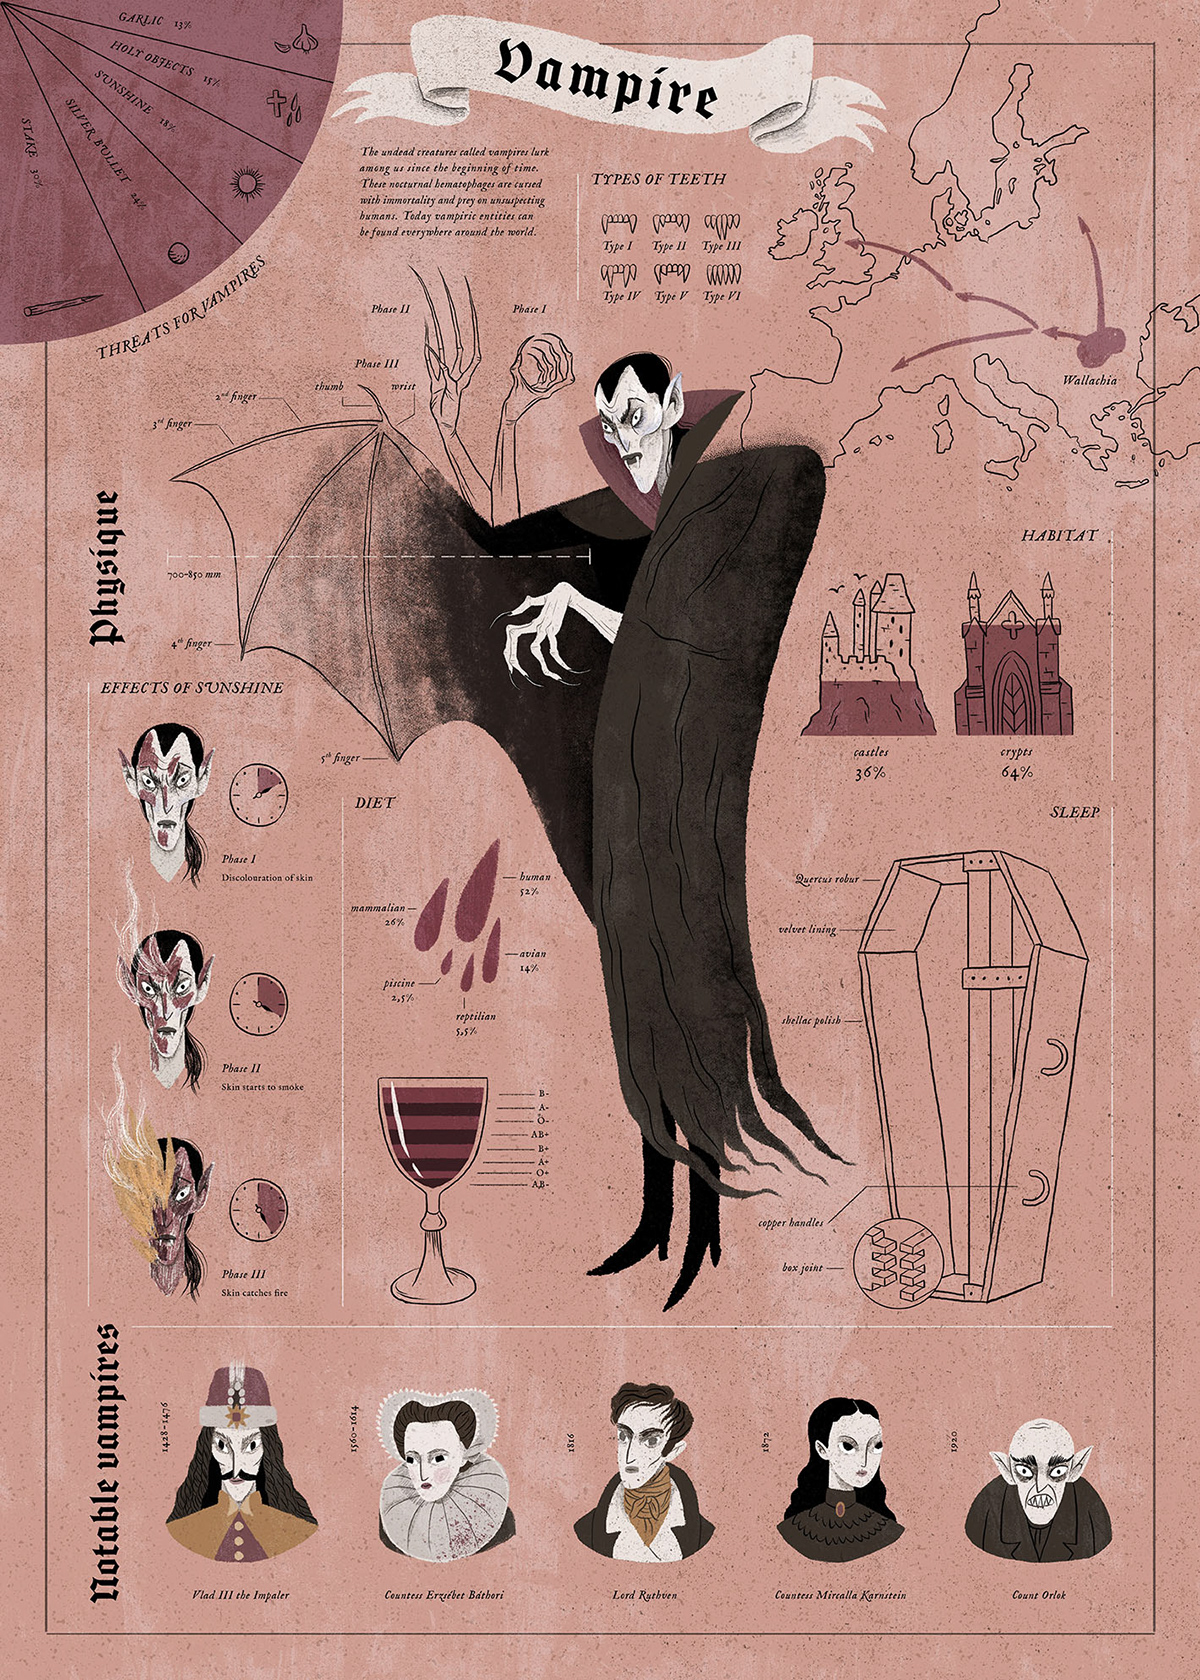 infographic Horror Art humor Folklore mythology fantasy